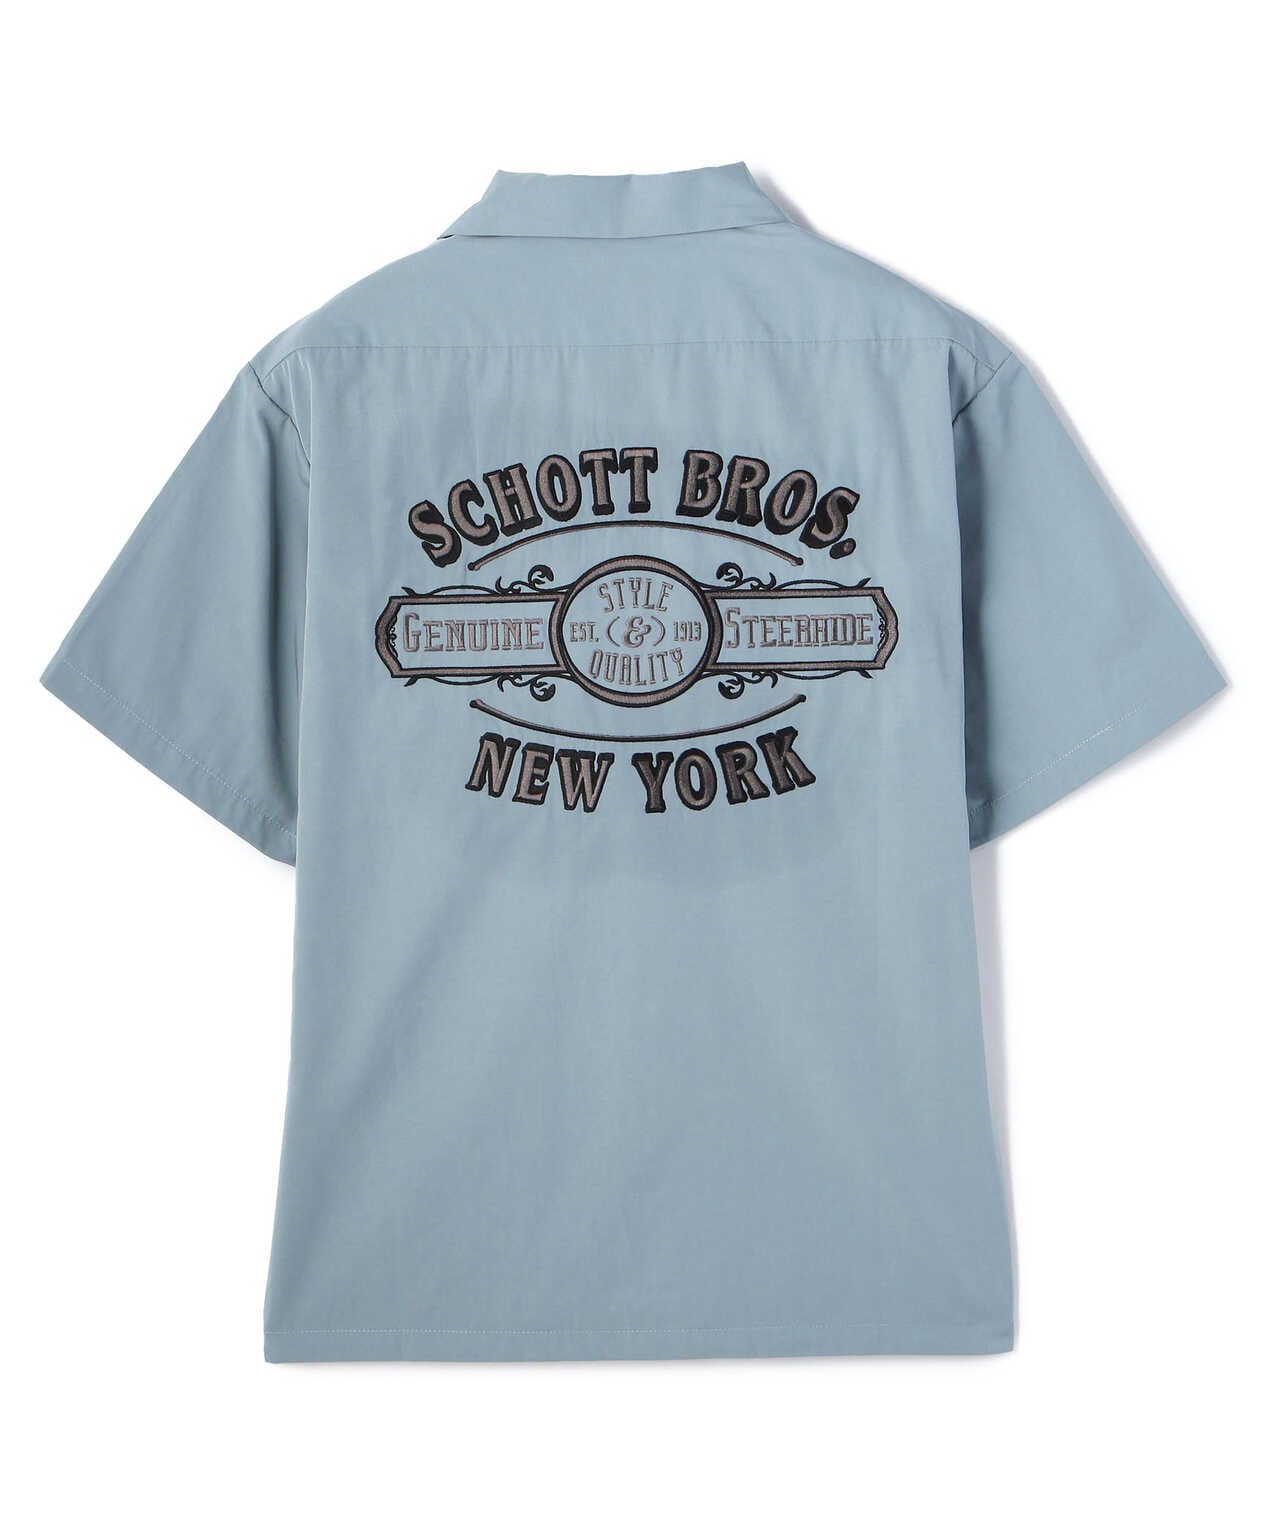 EMB. TC WORK SHIRT/刺繍 ワークシャツ | Schott ( ショット ) | US ...